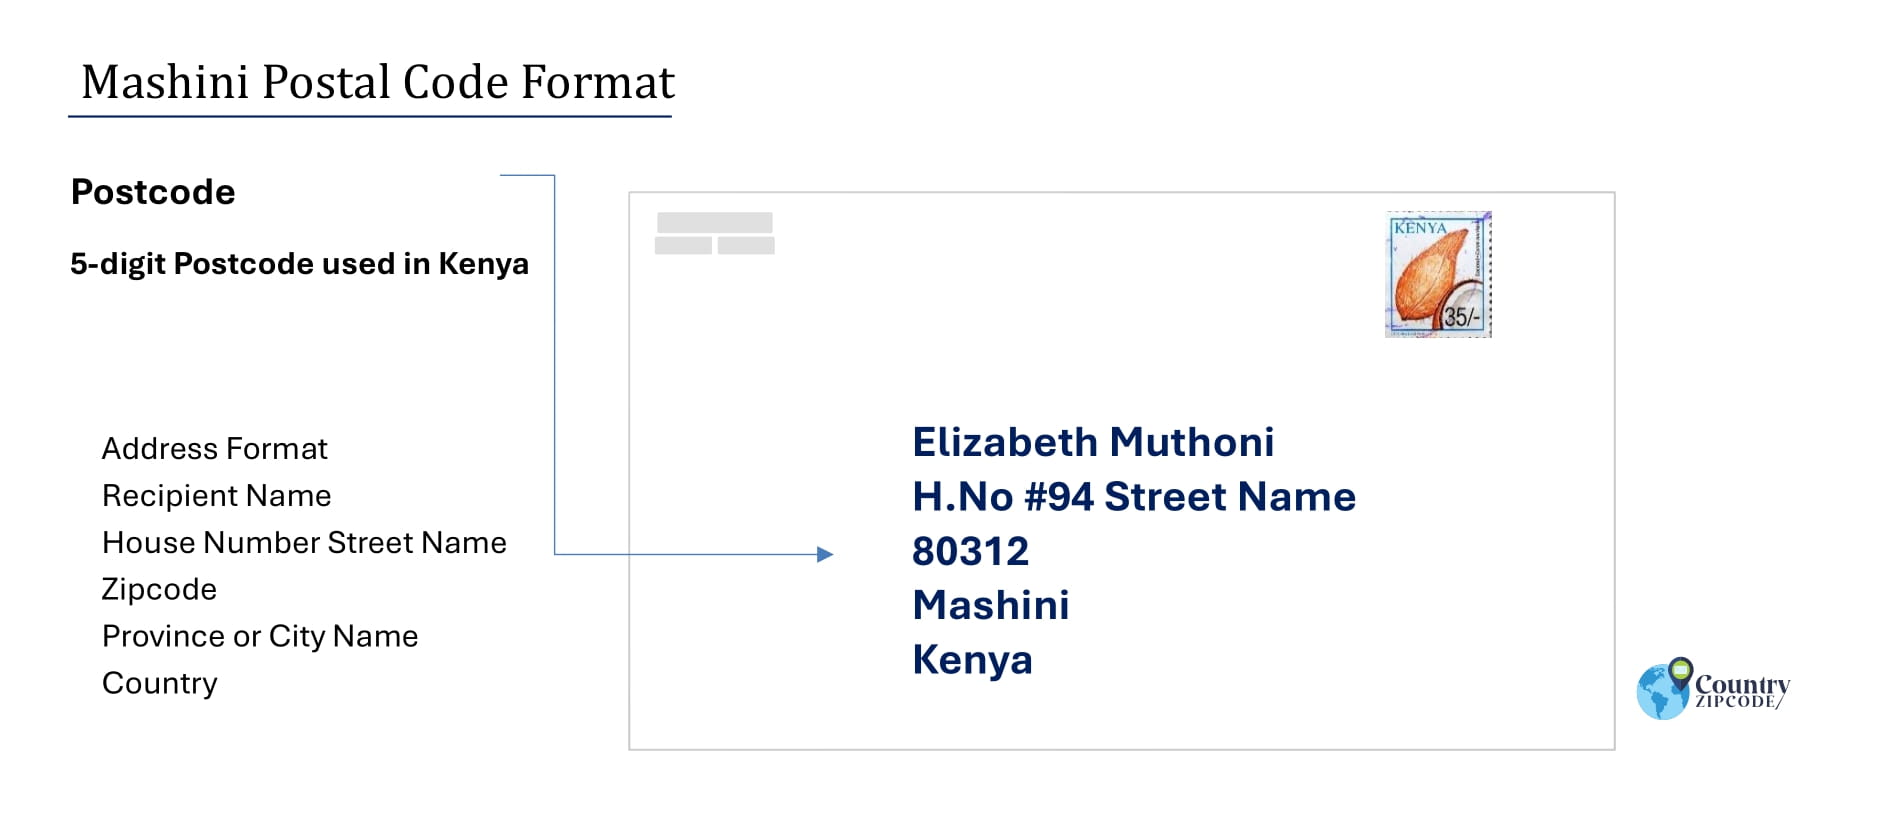 Example of Mashini Address and postal code format